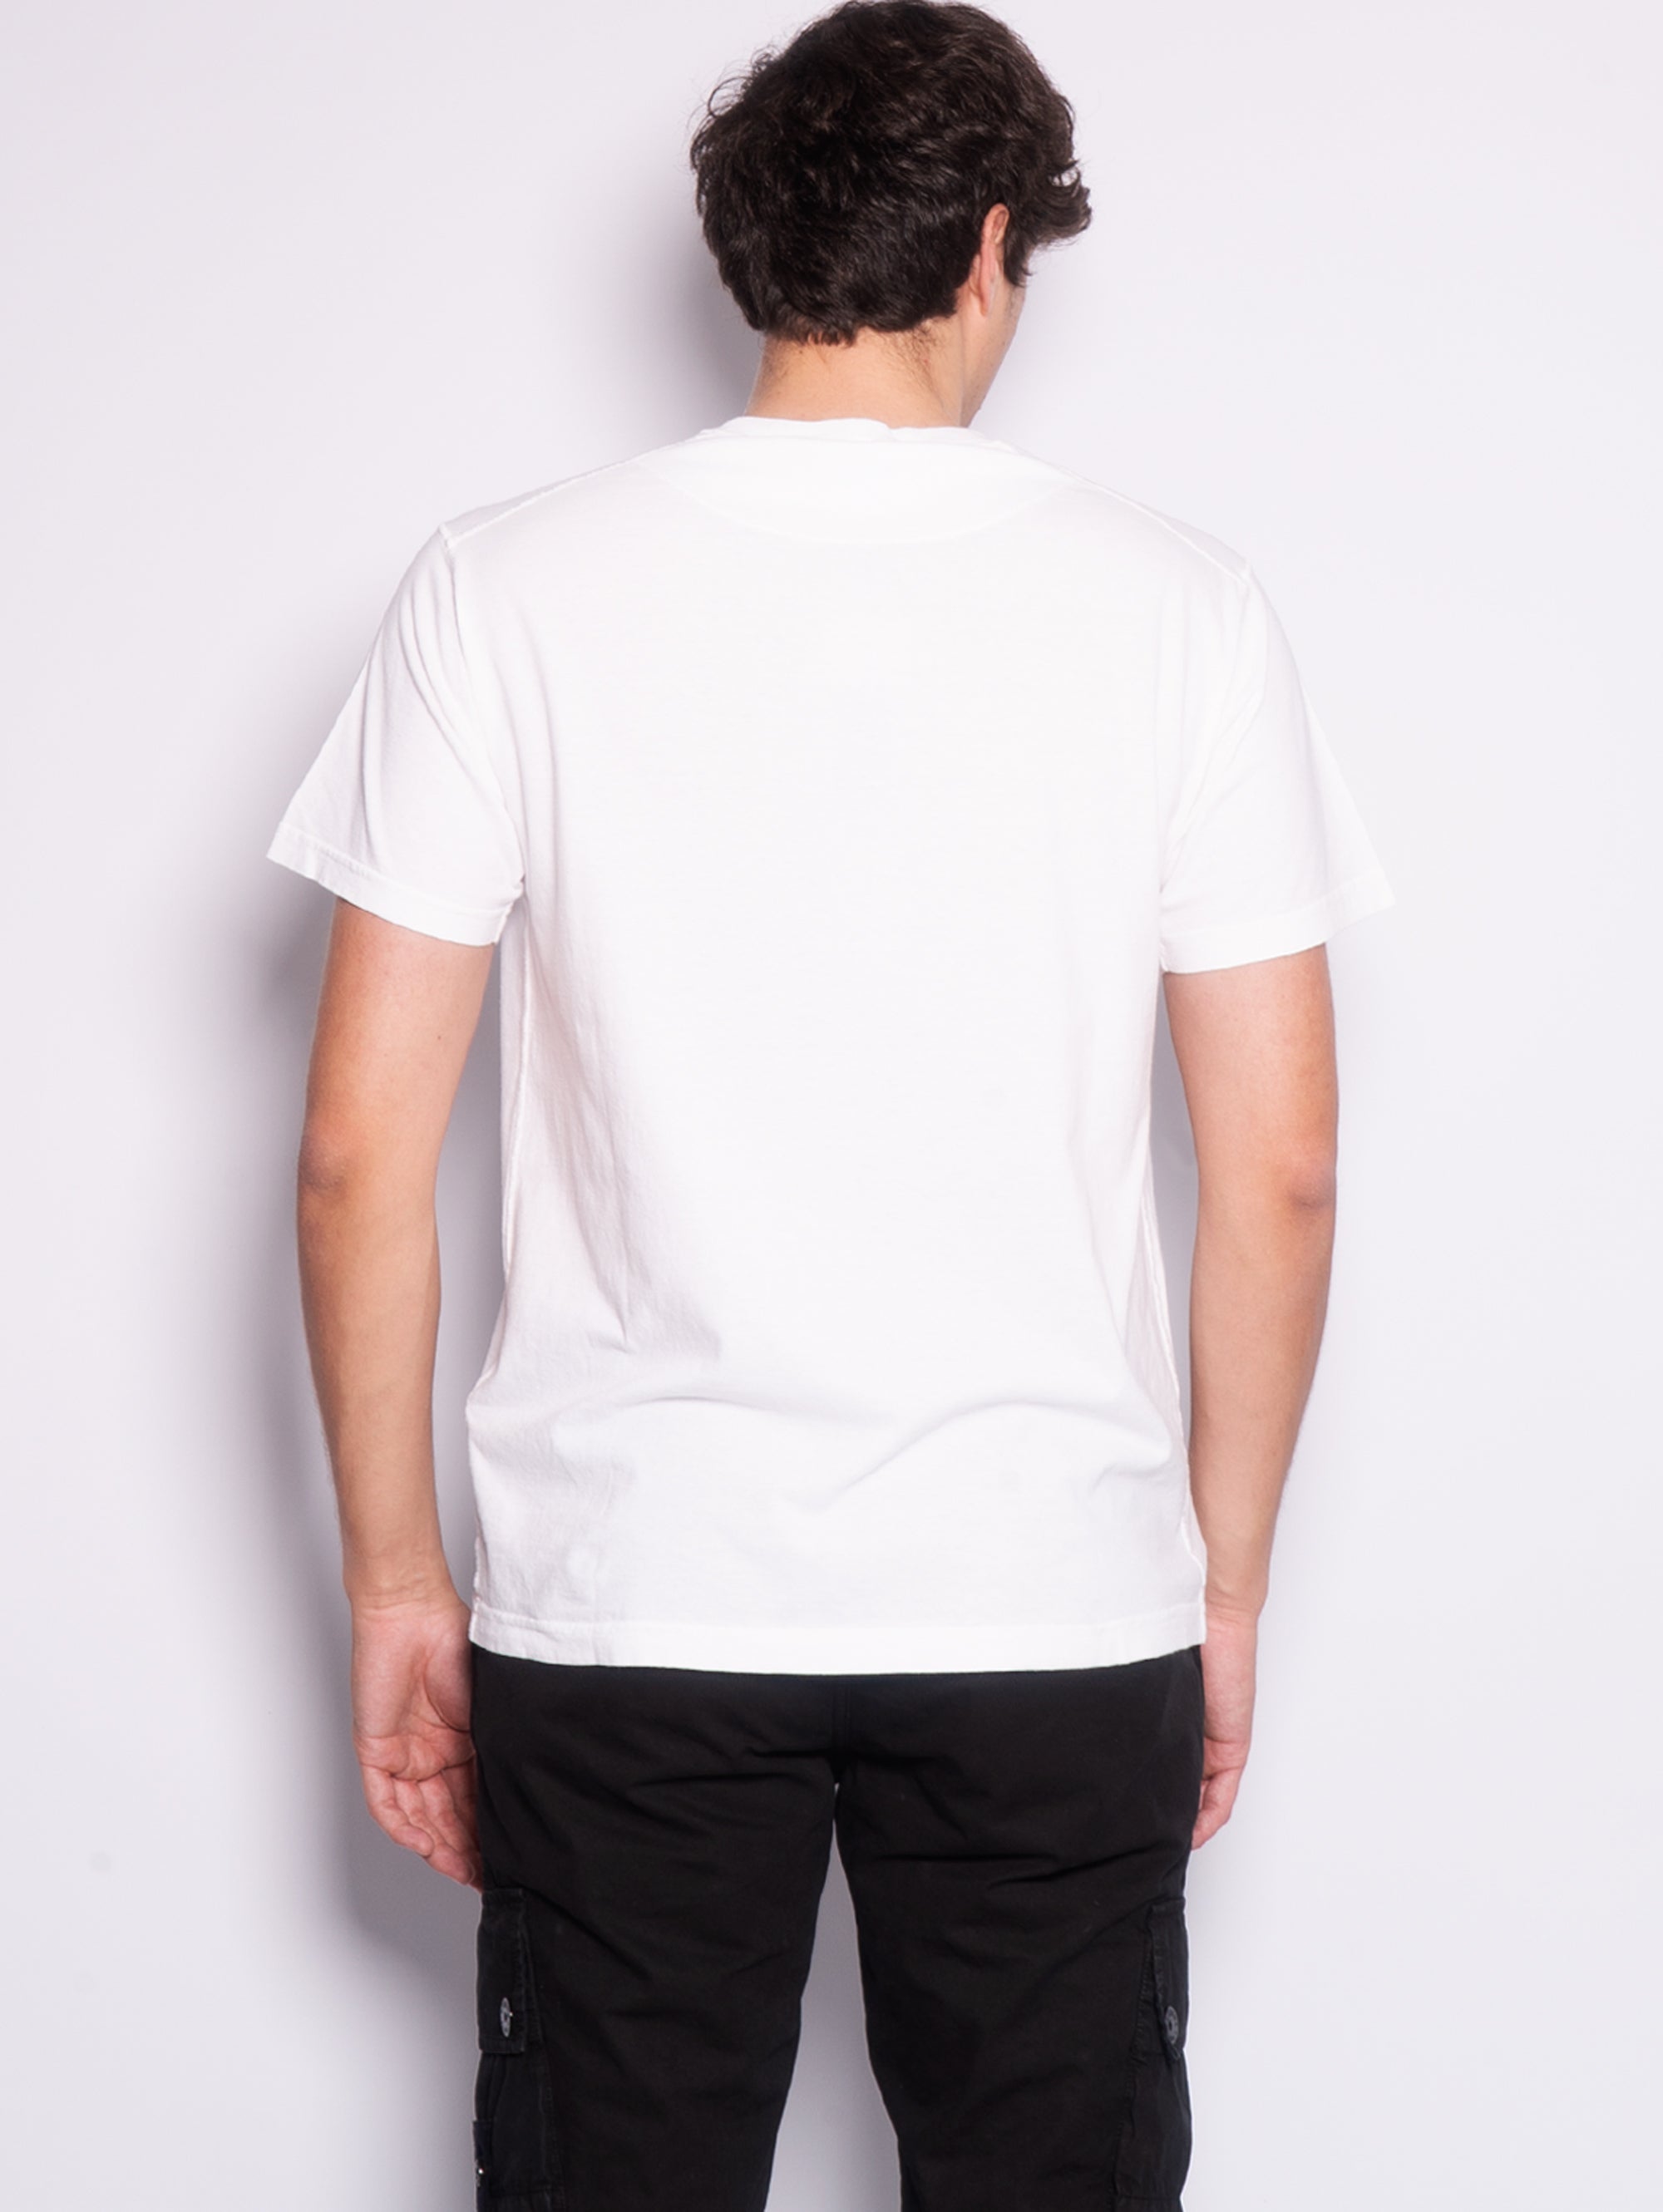 Stückgefärbtes T-Shirt mit festem Weißeffekt